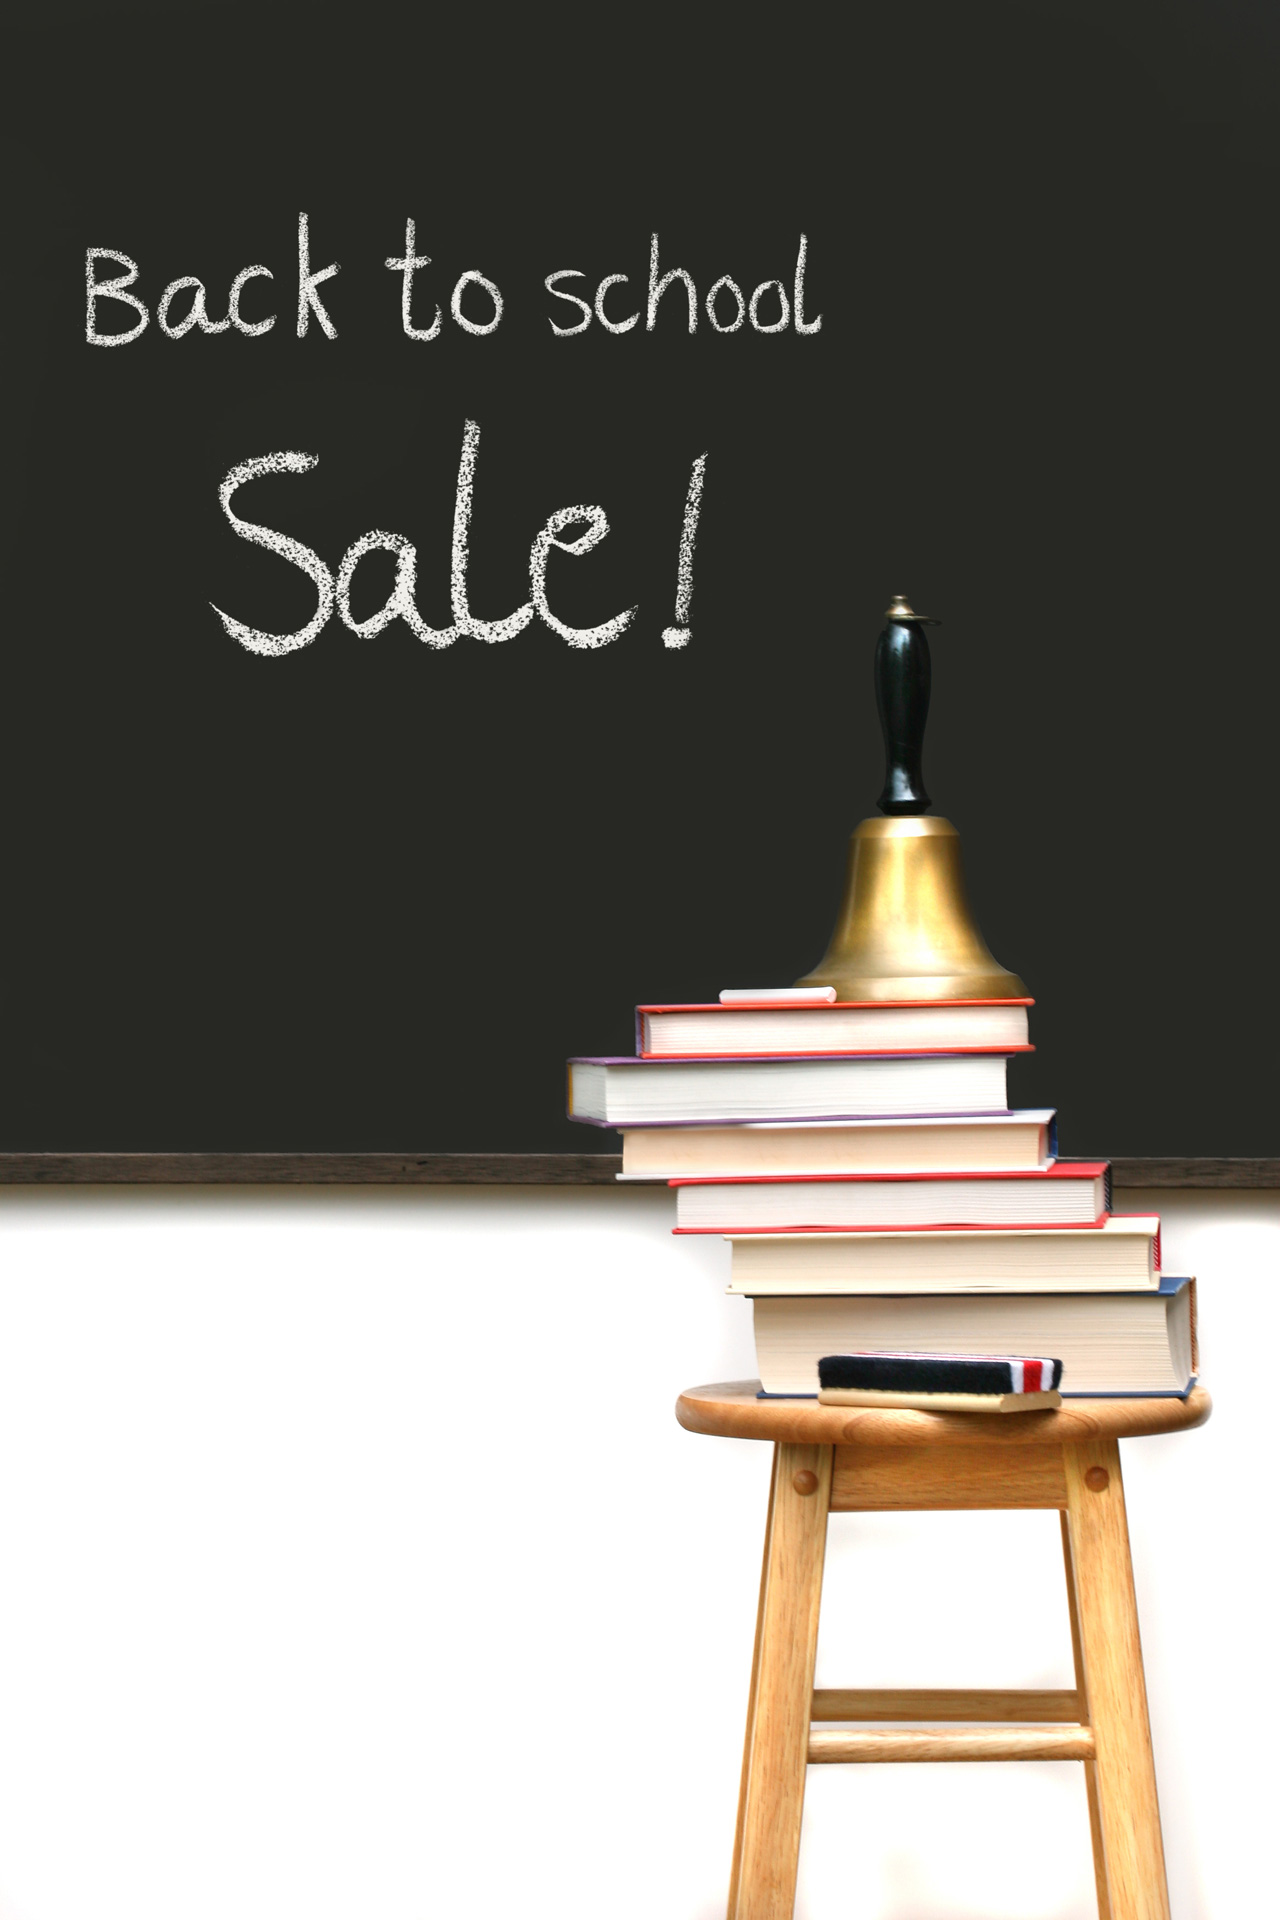 Back to school sale!